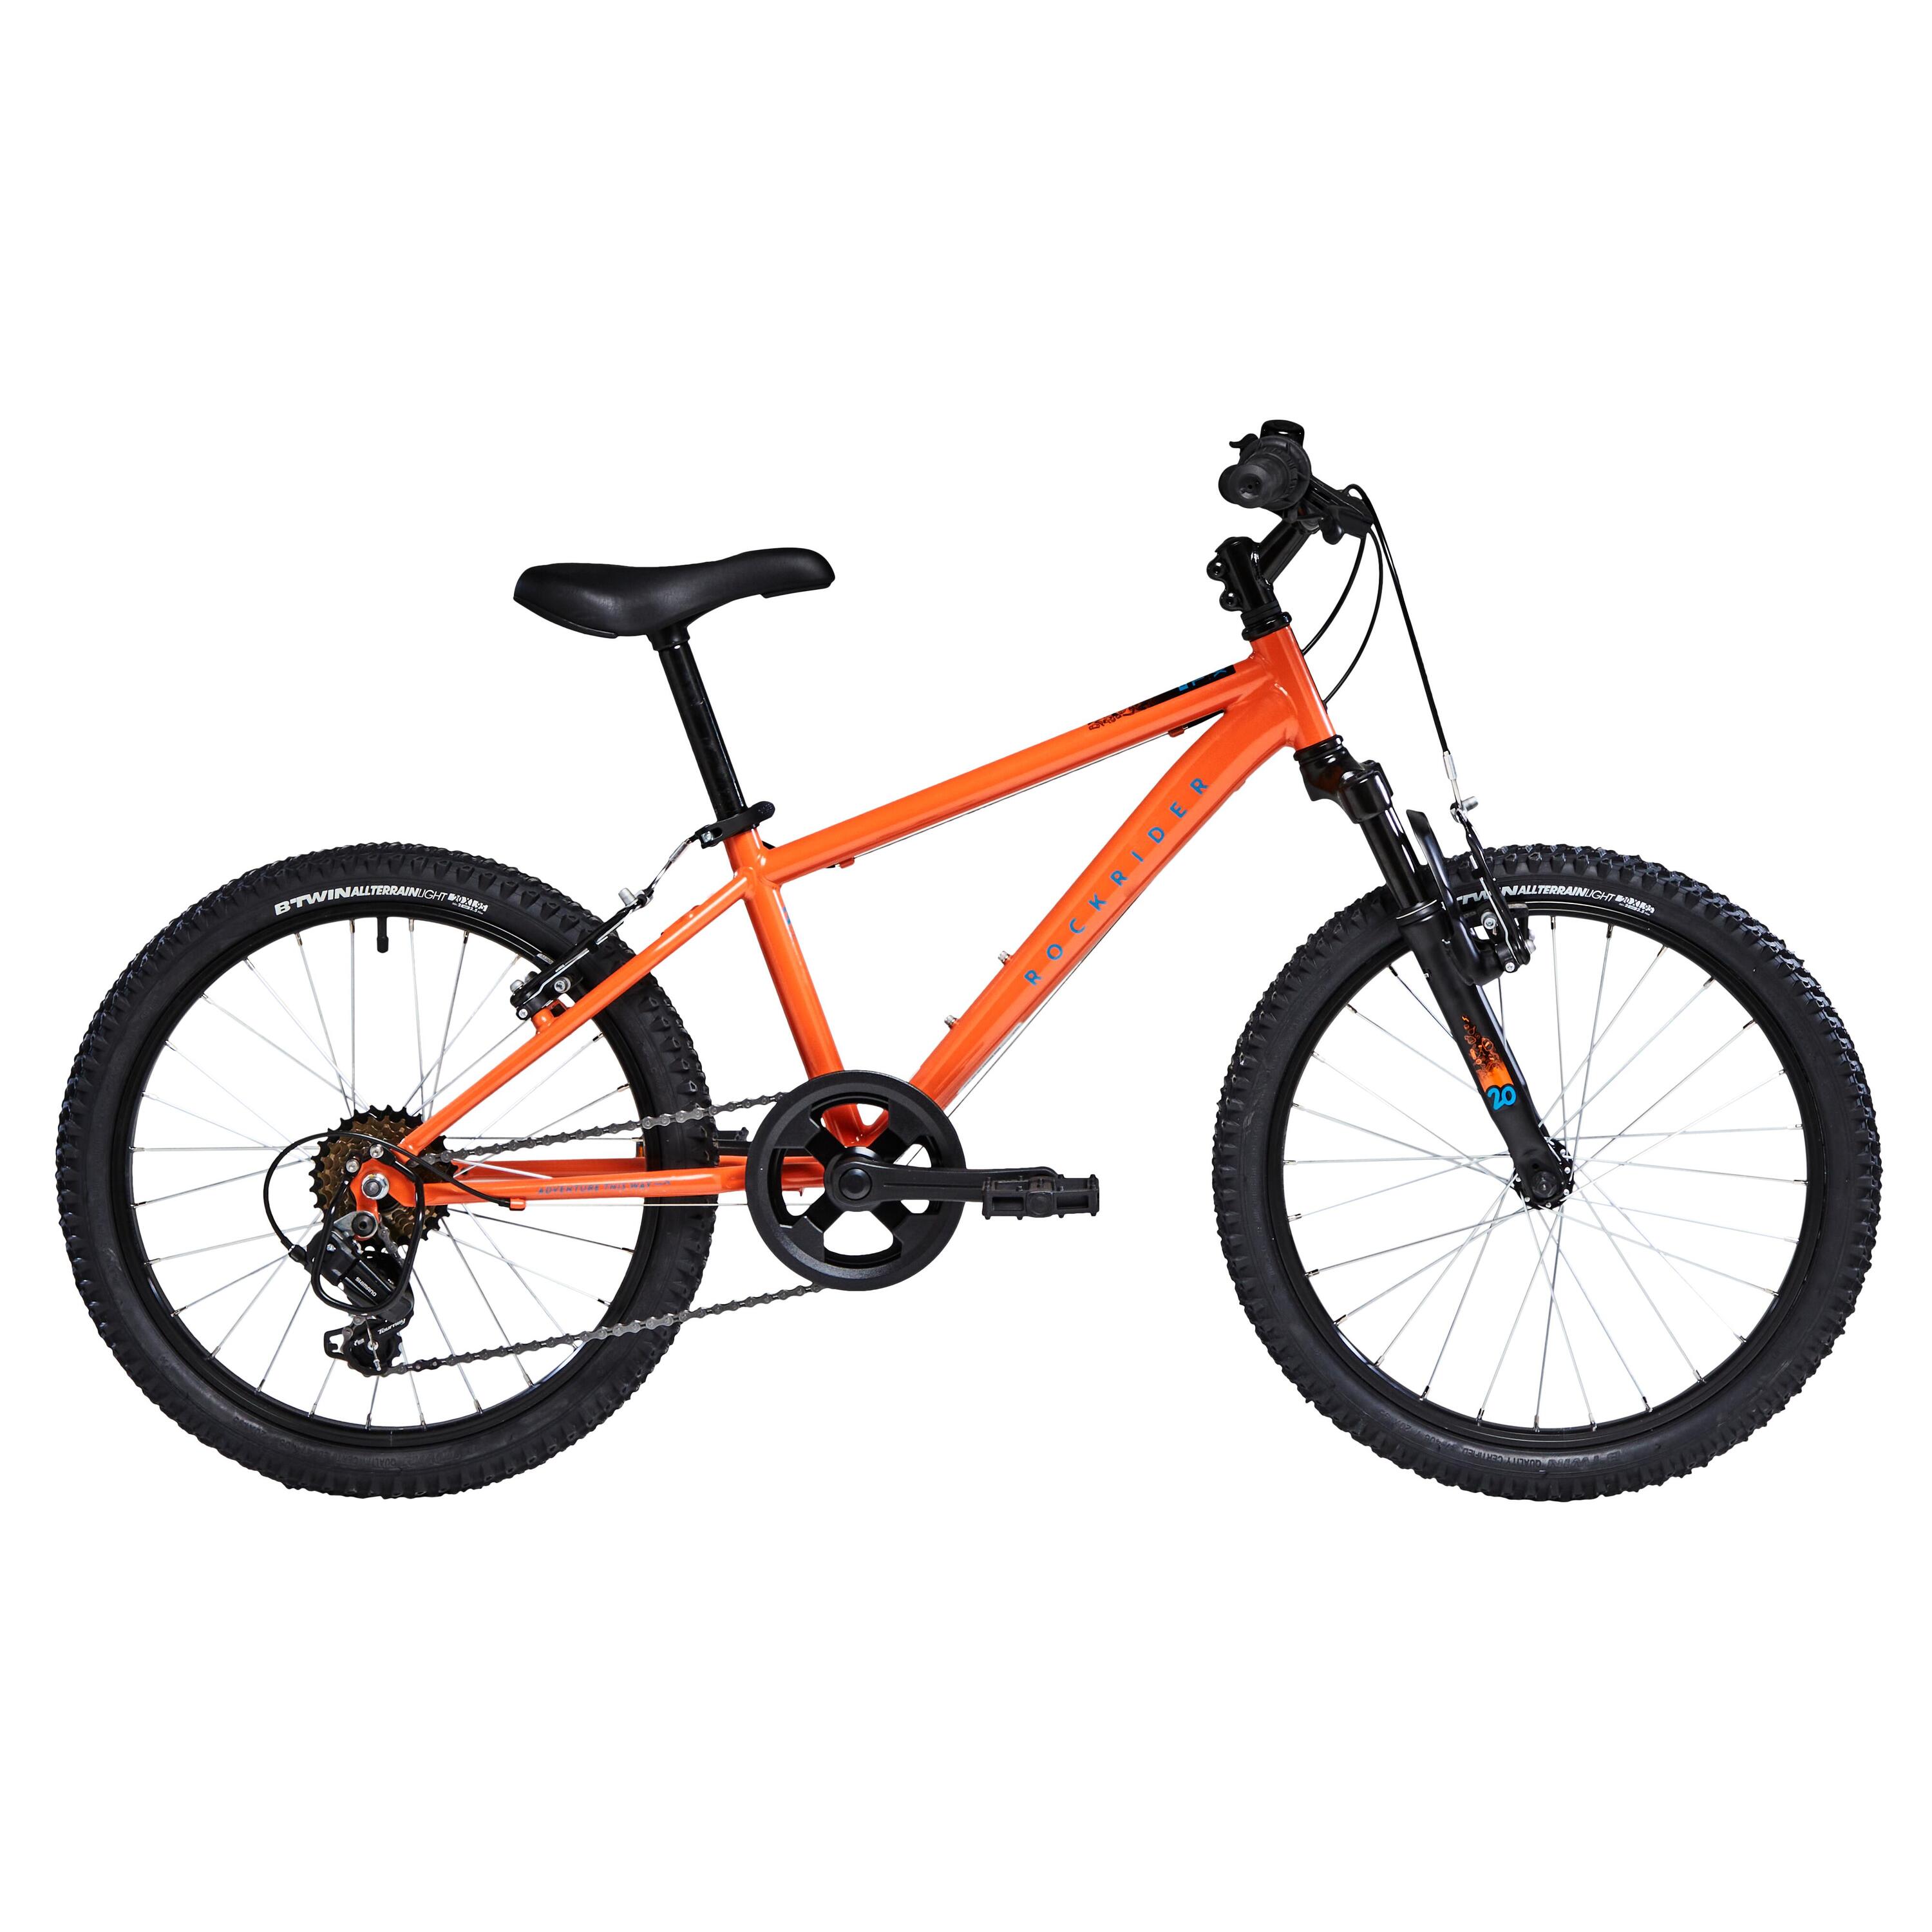 Kids' 20-Inch Mountain Bike Explore 500 Ages 6-9 - Orange 1/13